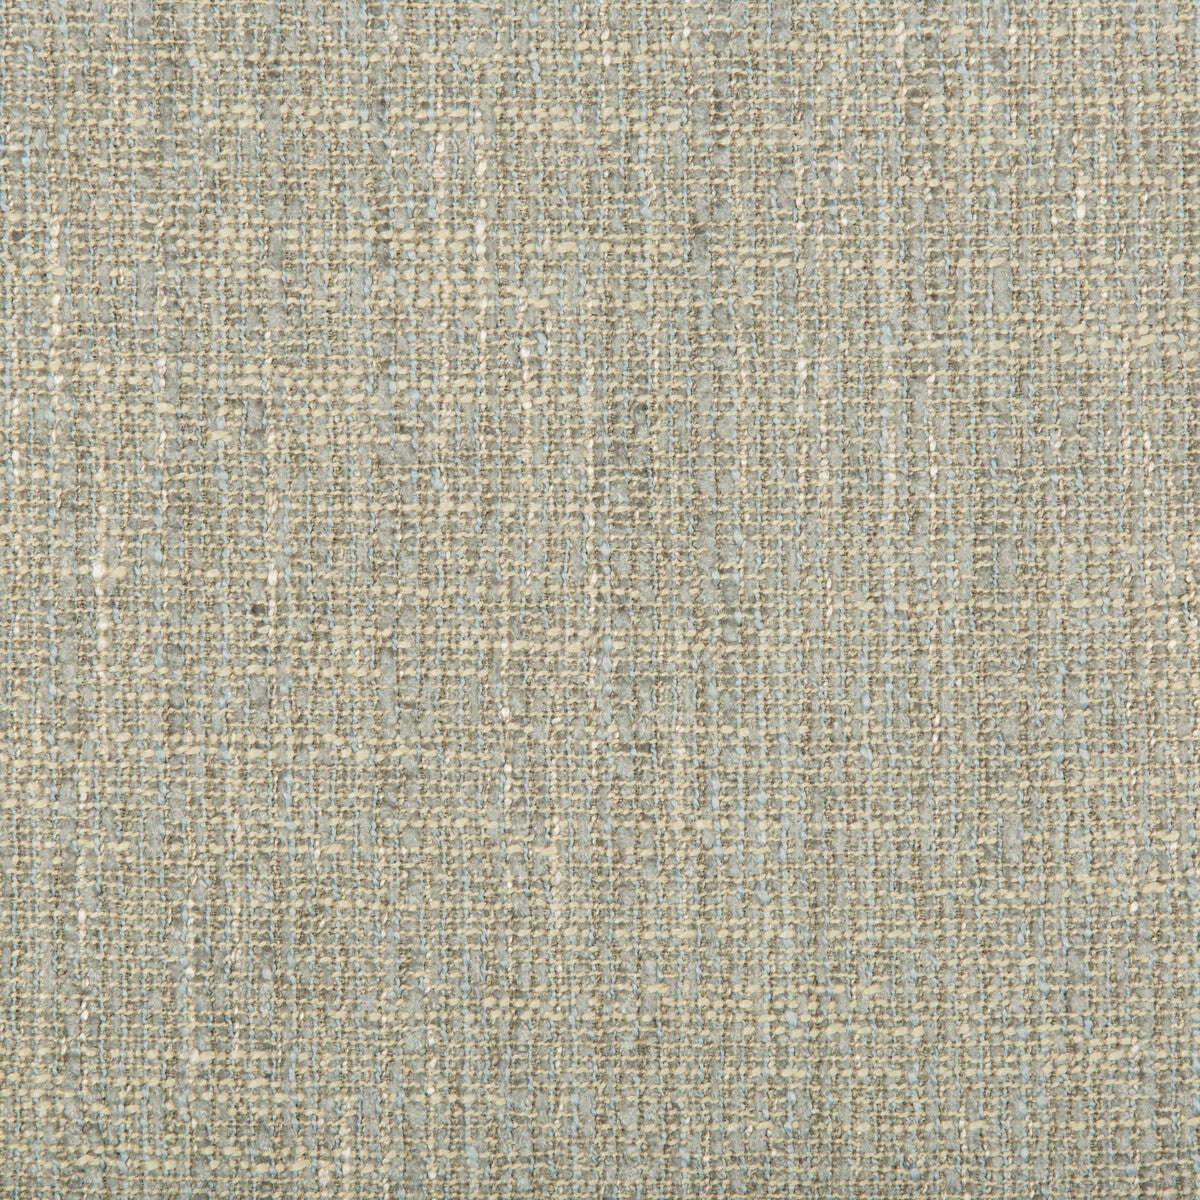 Kravet Smart fabric in 35320-1521 color - pattern 35320.1521.0 - by Kravet Smart in the Performance Kravetarmor collection